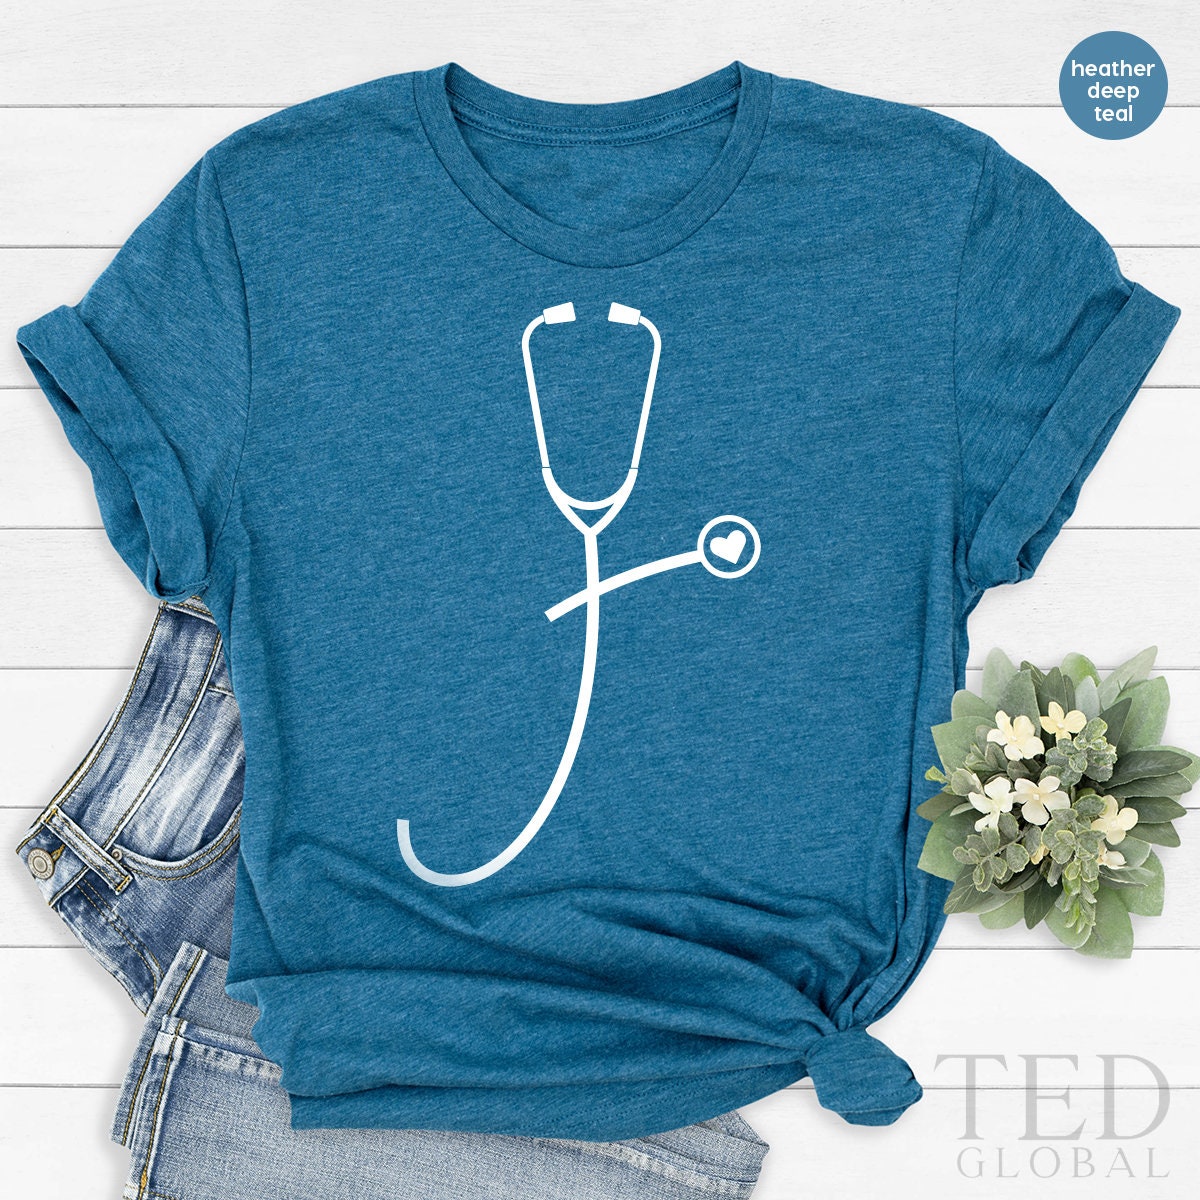 Nurses T Shirt,Doctors T Shirt,Stethoscope Shirt,Nurses Life T Shirt,Nursing School Shirt,Emergency Nurse Shirt,Doctors Gifts,Nurse Gifts - Fastdeliverytees.com